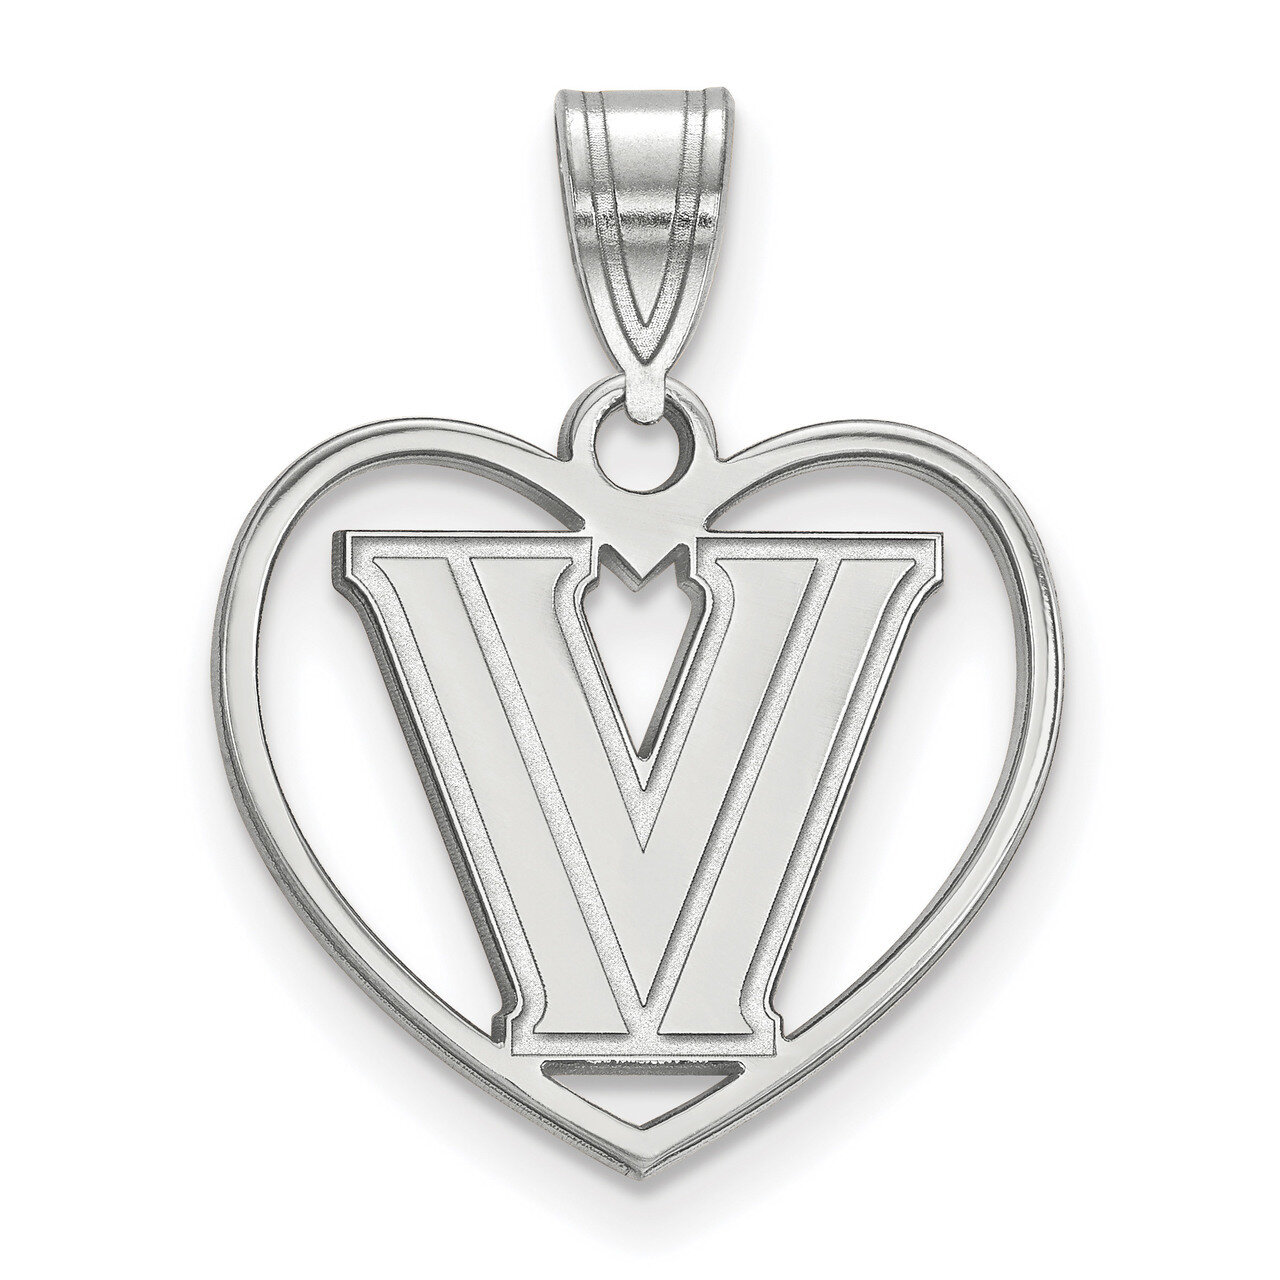 Villanova University Pendant in Heart Sterling Silver SS011VIL